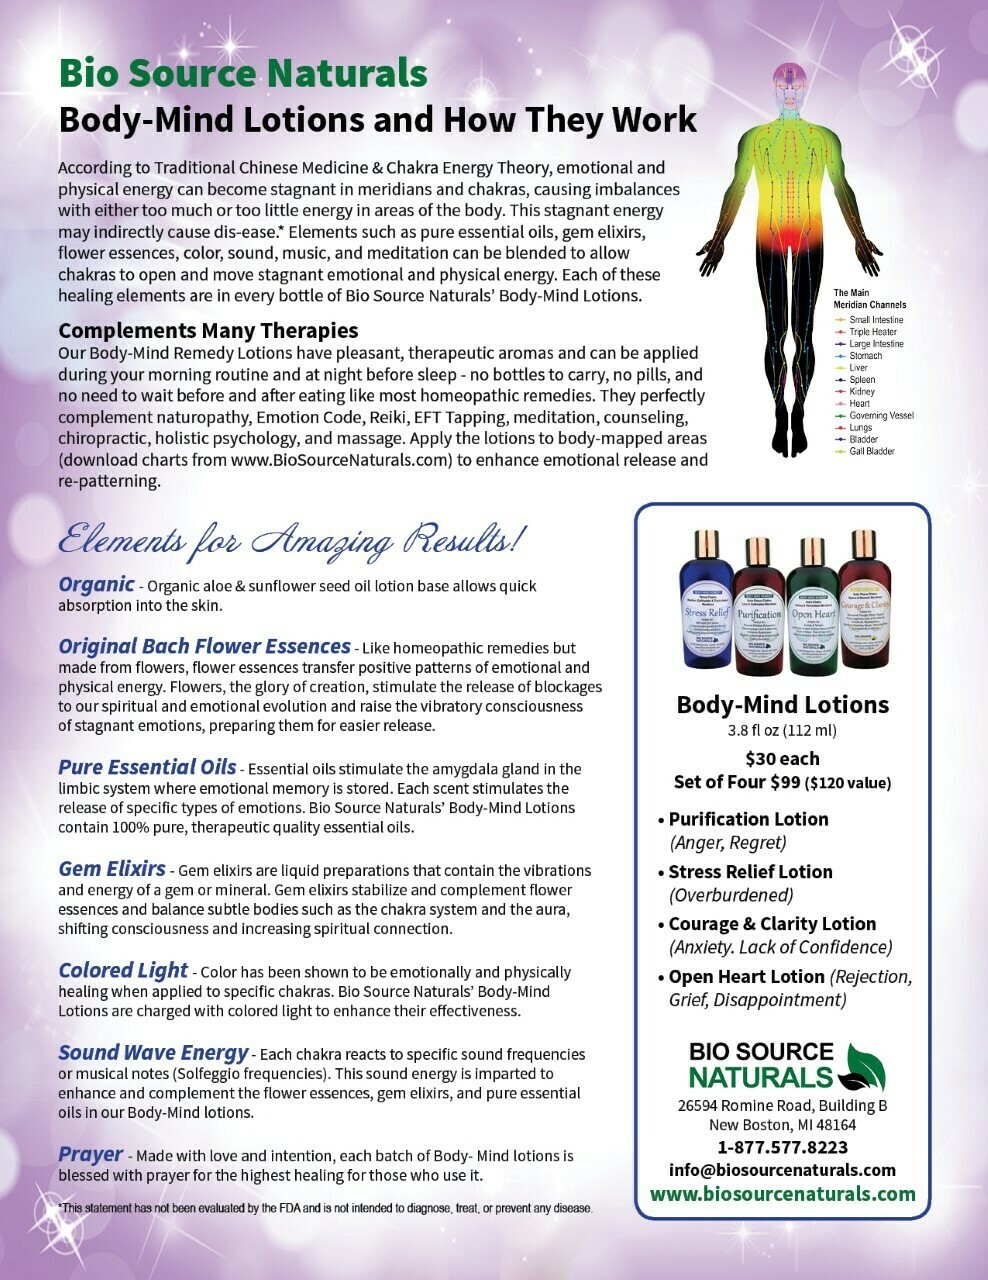 Bio Source Naturals Body-Mind Lotion Set Product Bulletin